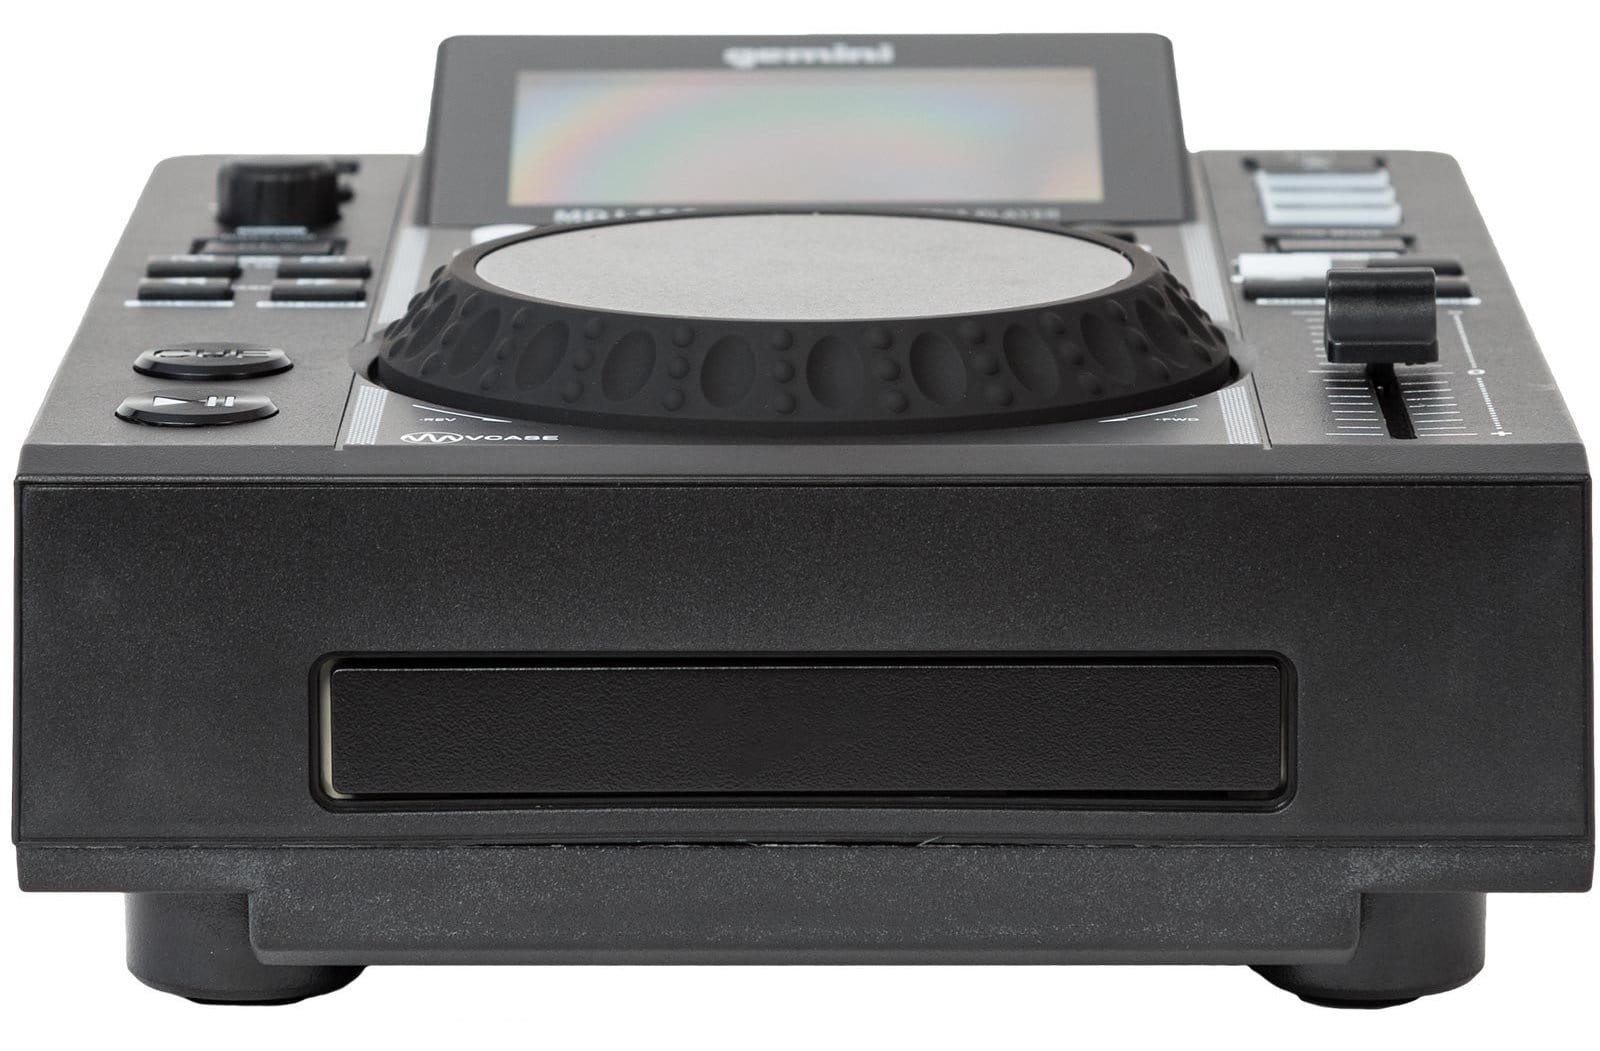 Gemini MDJ-600 Tabletop DJ Media Player